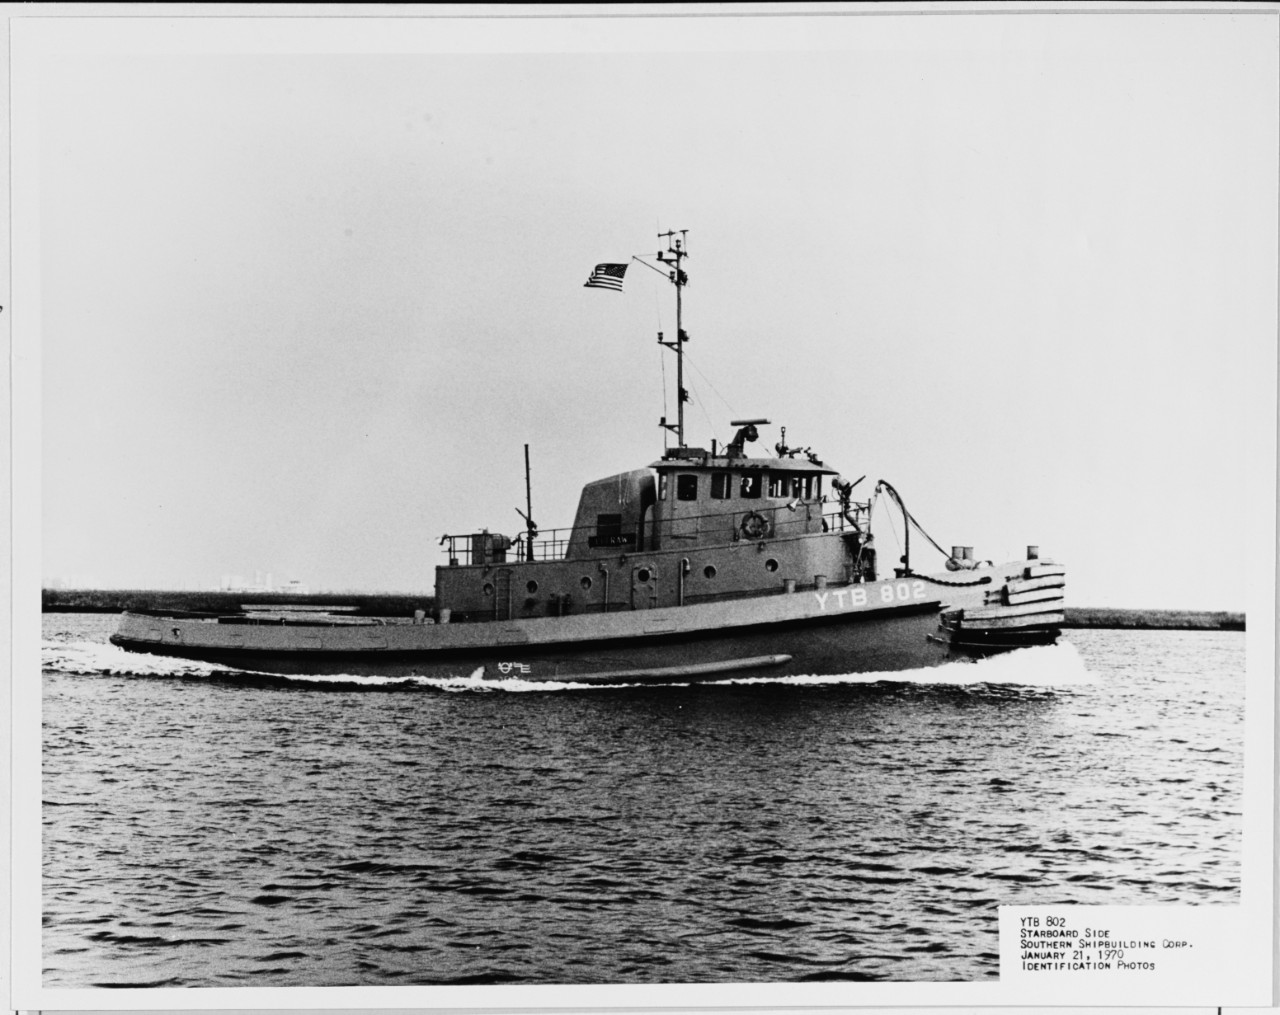 USS CHERAW (YTB-802)